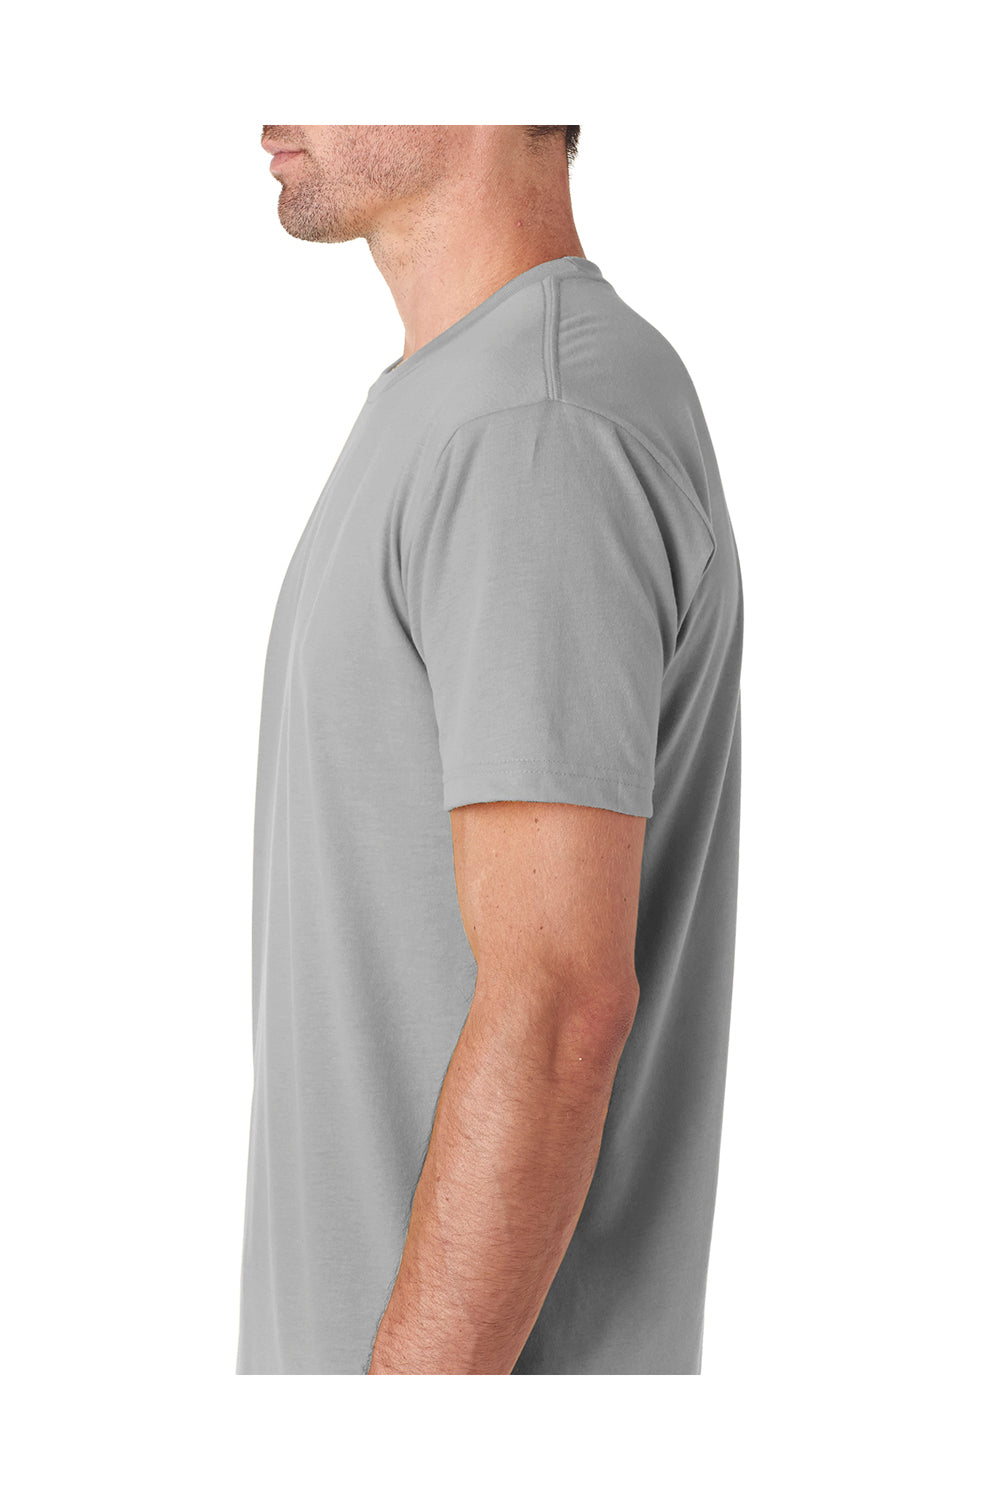 Next Level 6410 Mens Sueded Jersey Short Sleeve Crewneck T-Shirt Light Grey Side